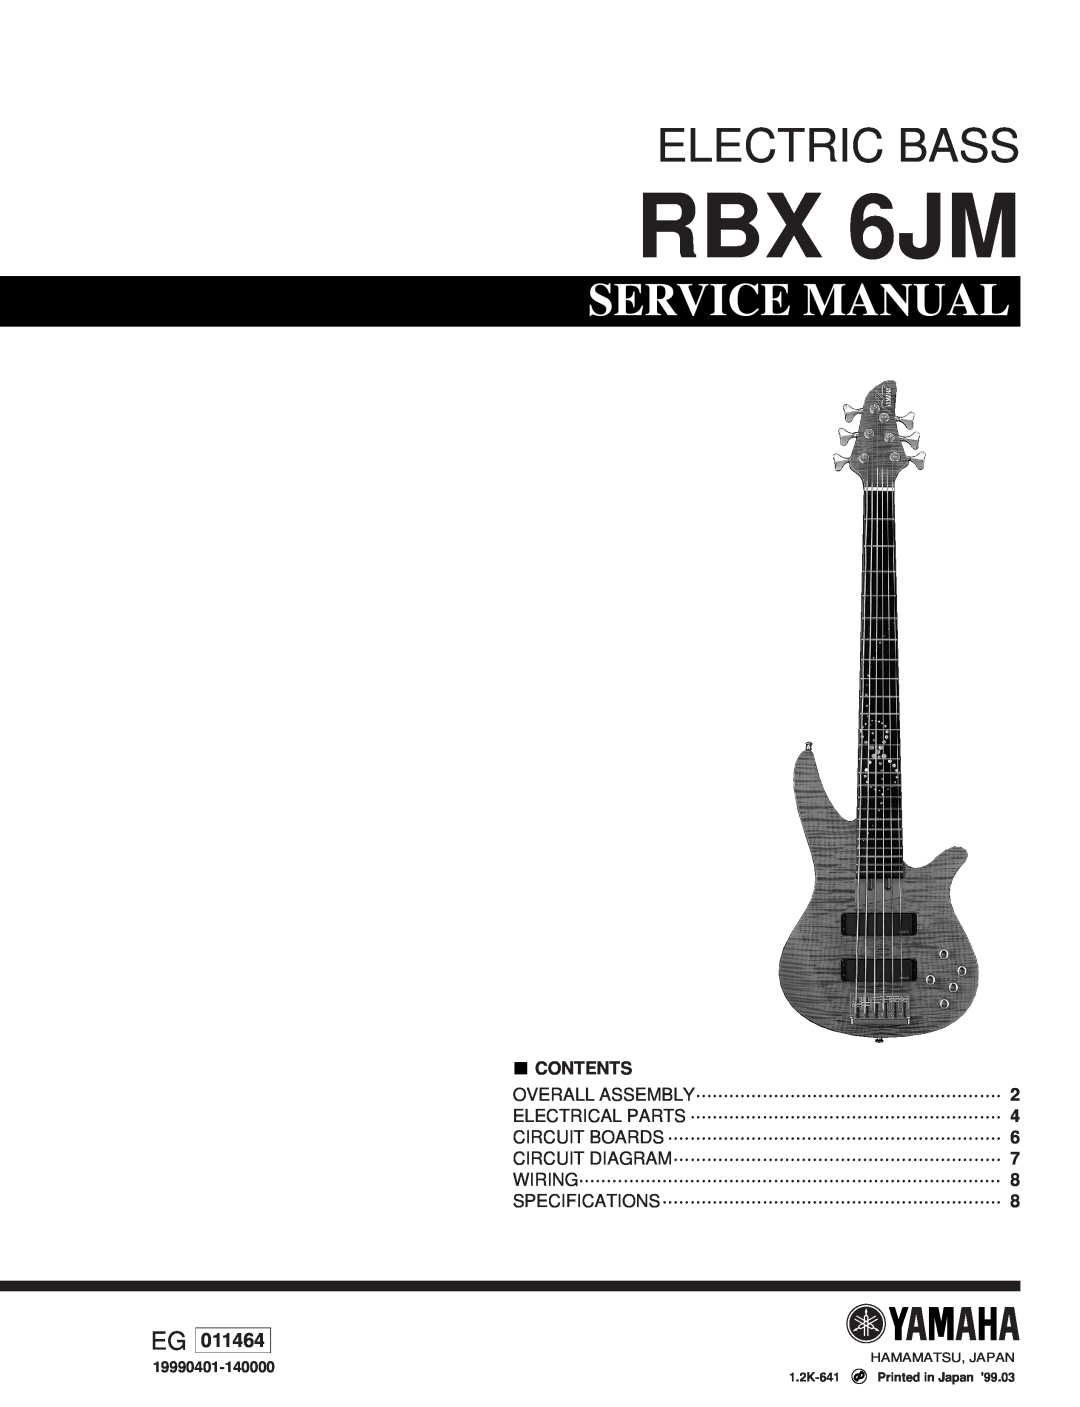 Yamaha RBX 6JM service manual Electric Bass, Service Manual, Contents, Hamamatsu, Japan, Overall Assembly, Circuit Boards 